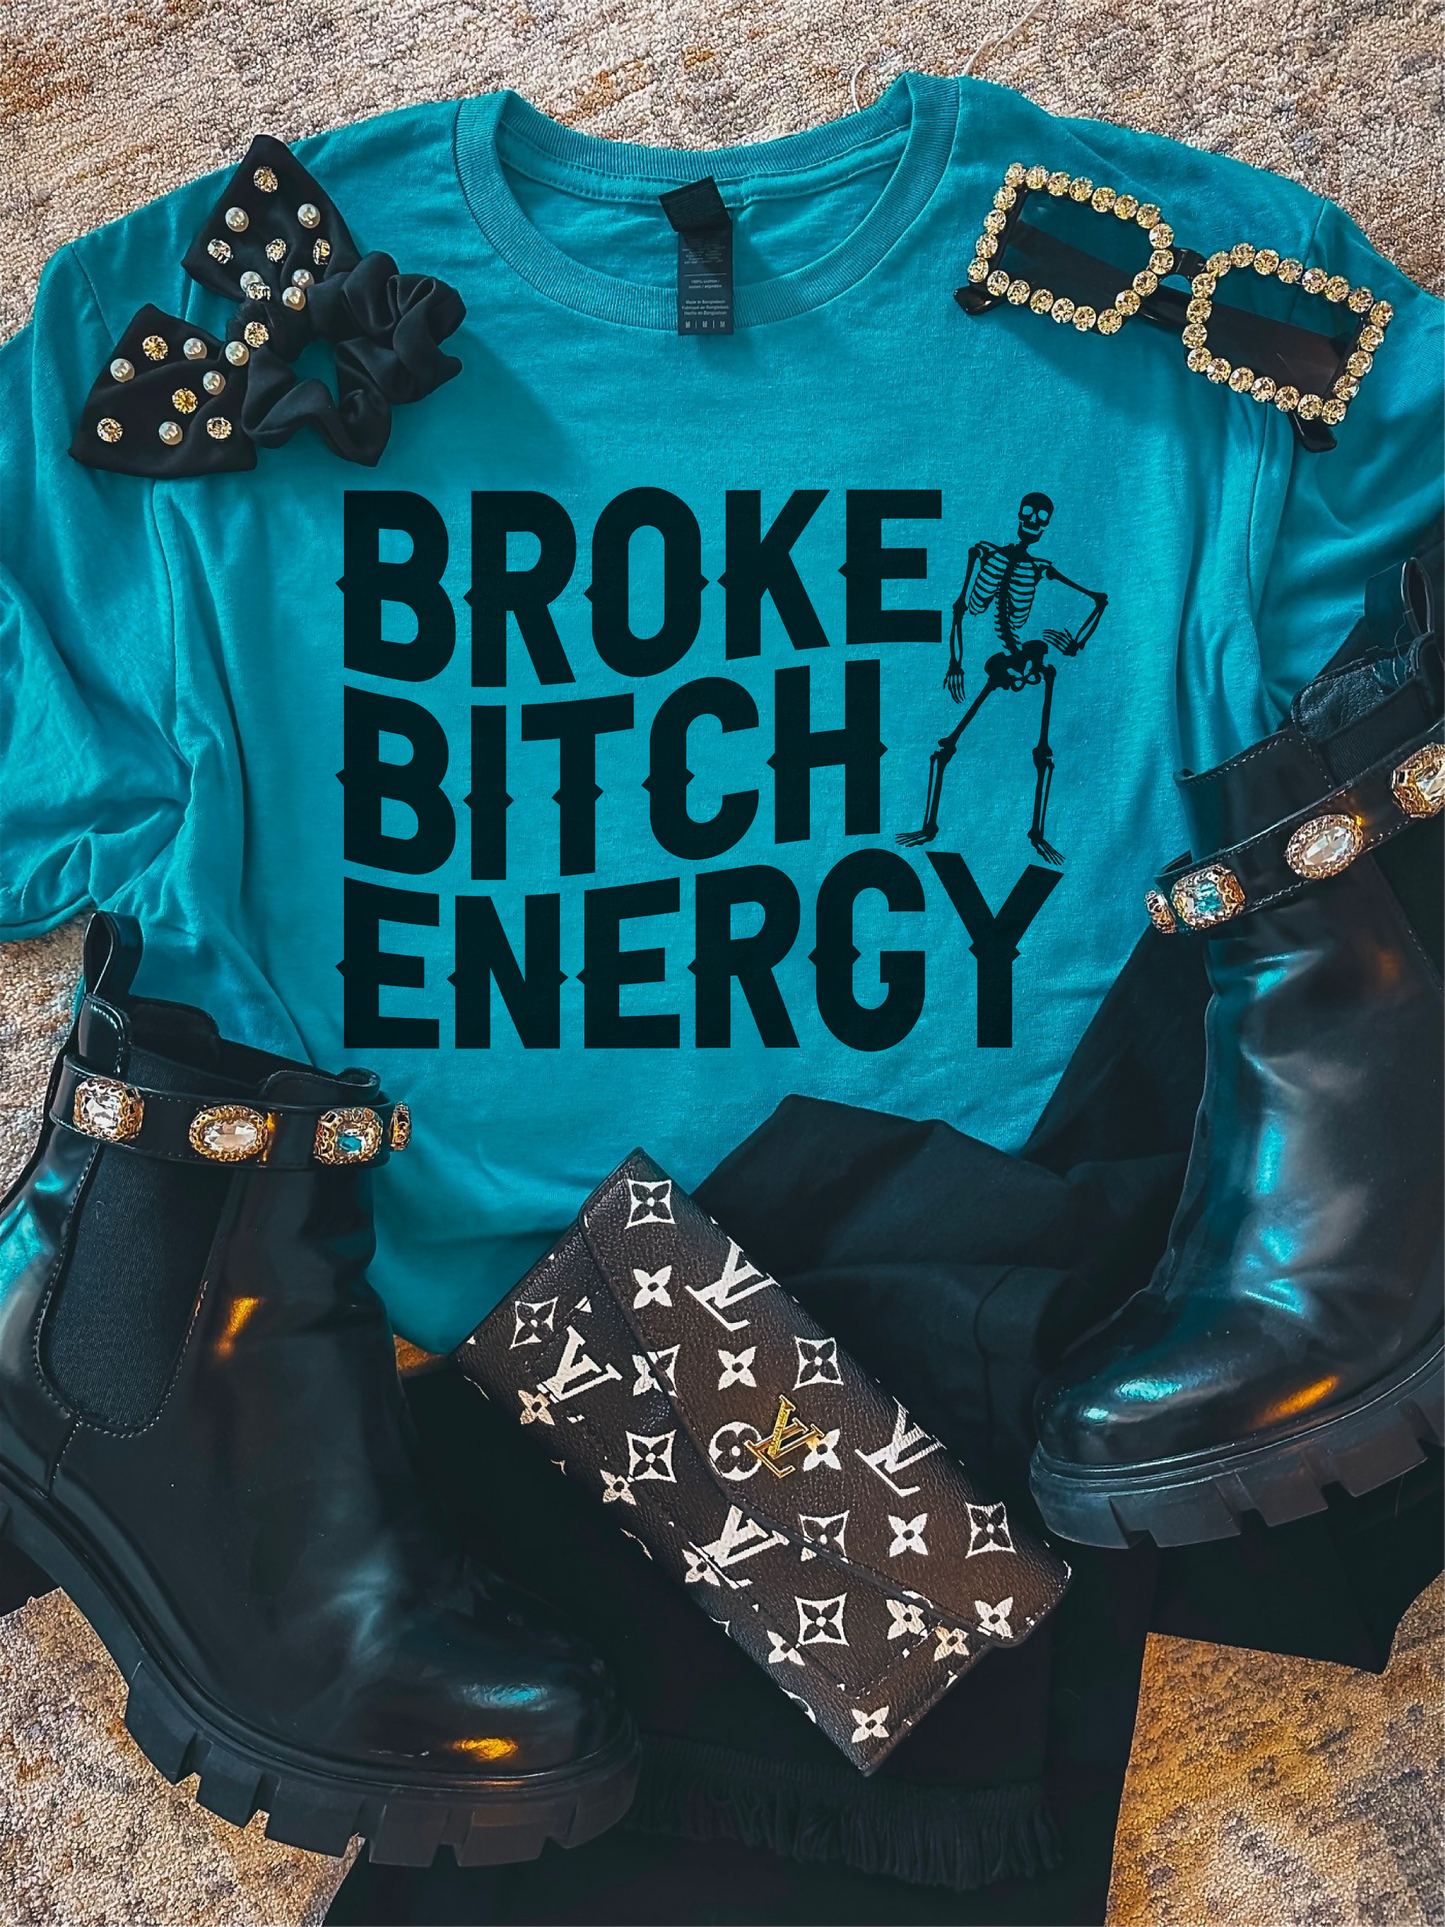 Broke B--ch Energy ~ NEW